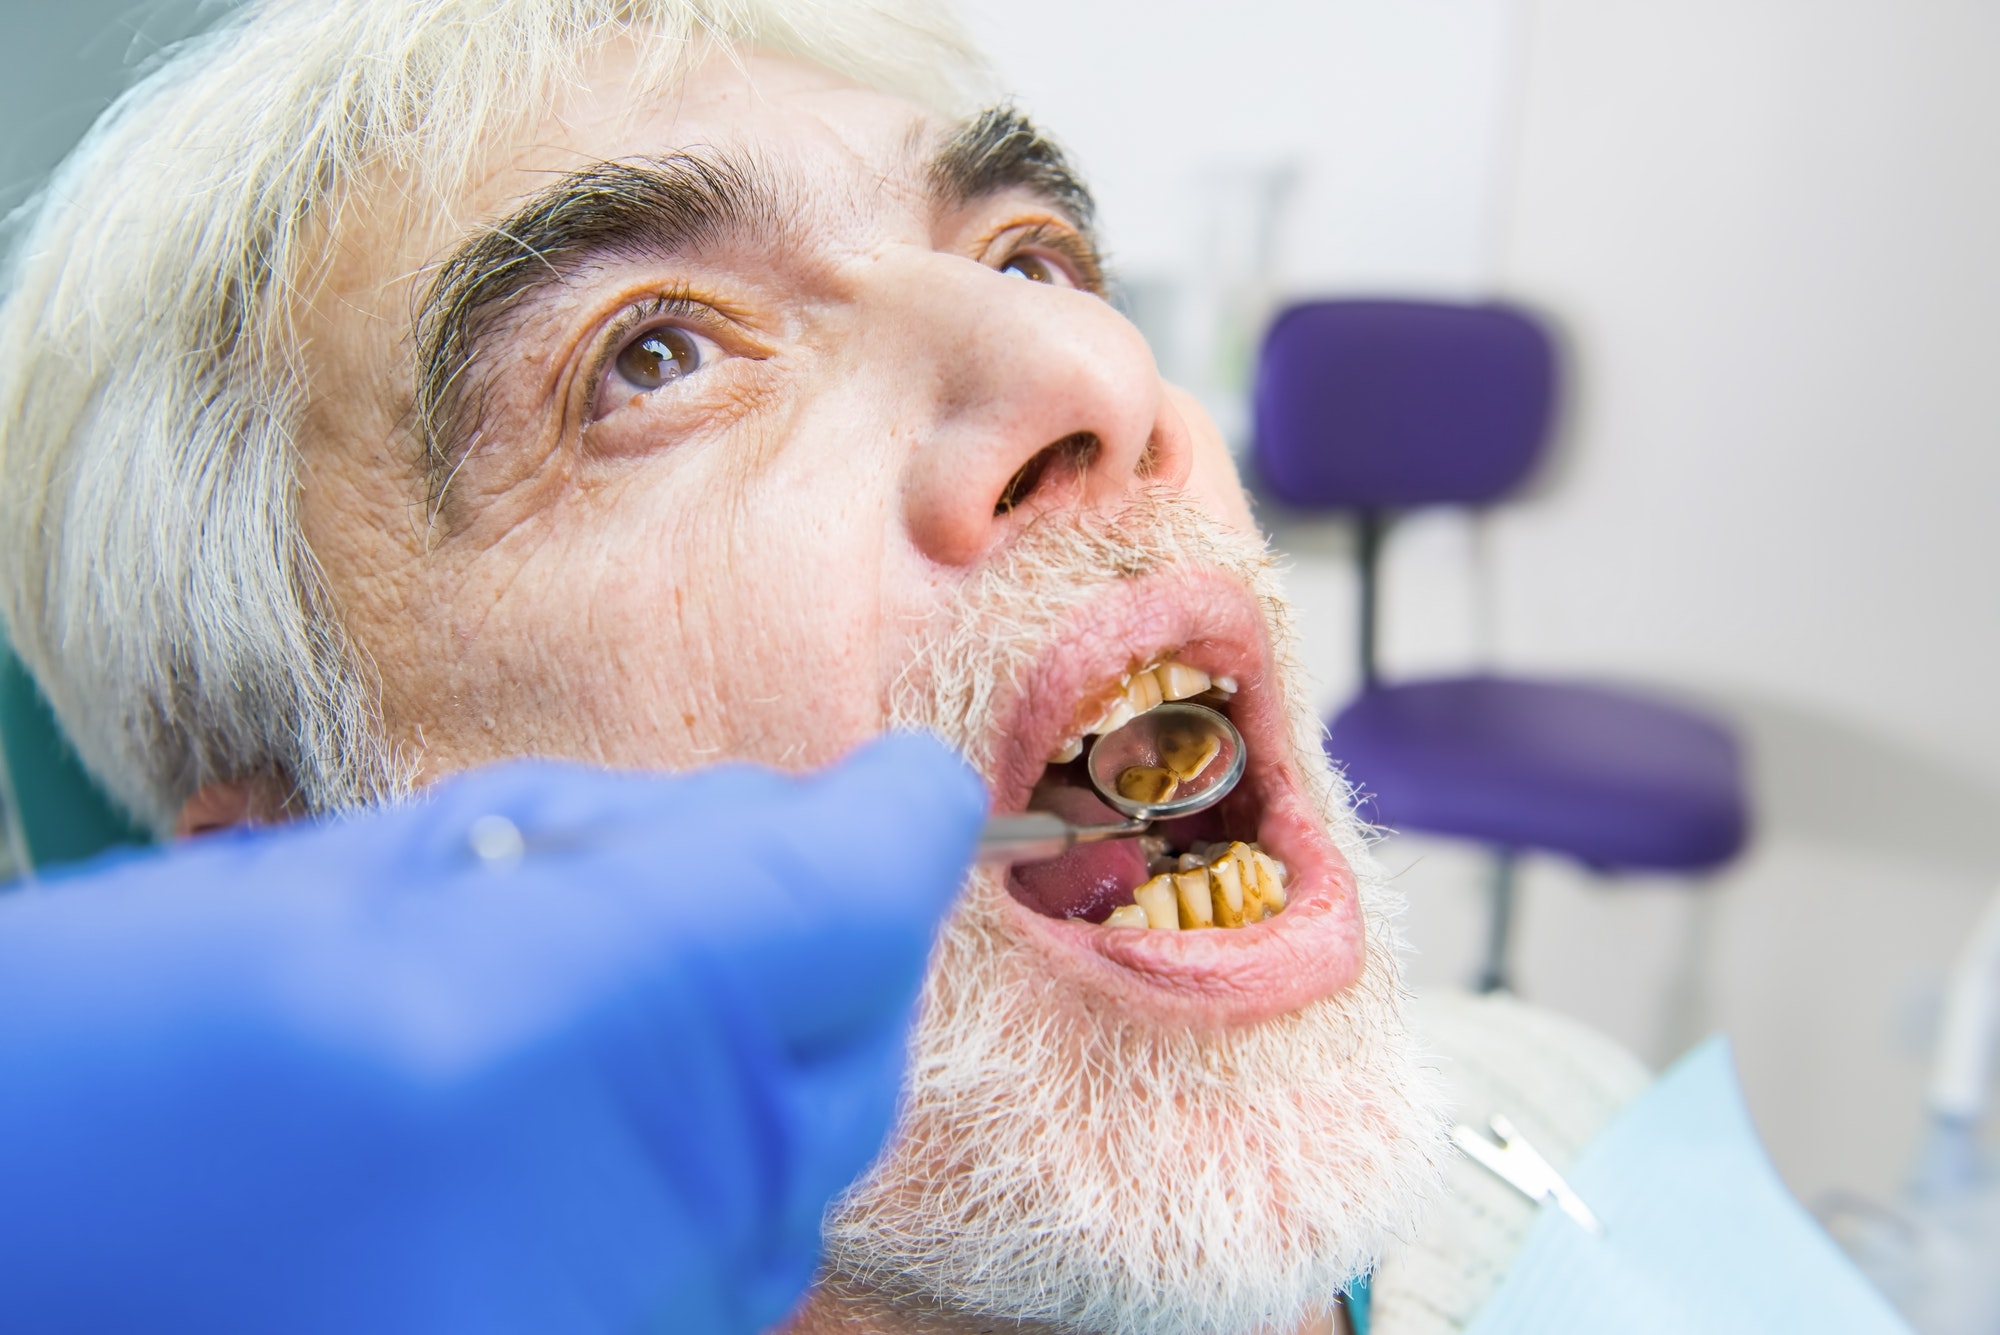 Elderly man with bad teeth